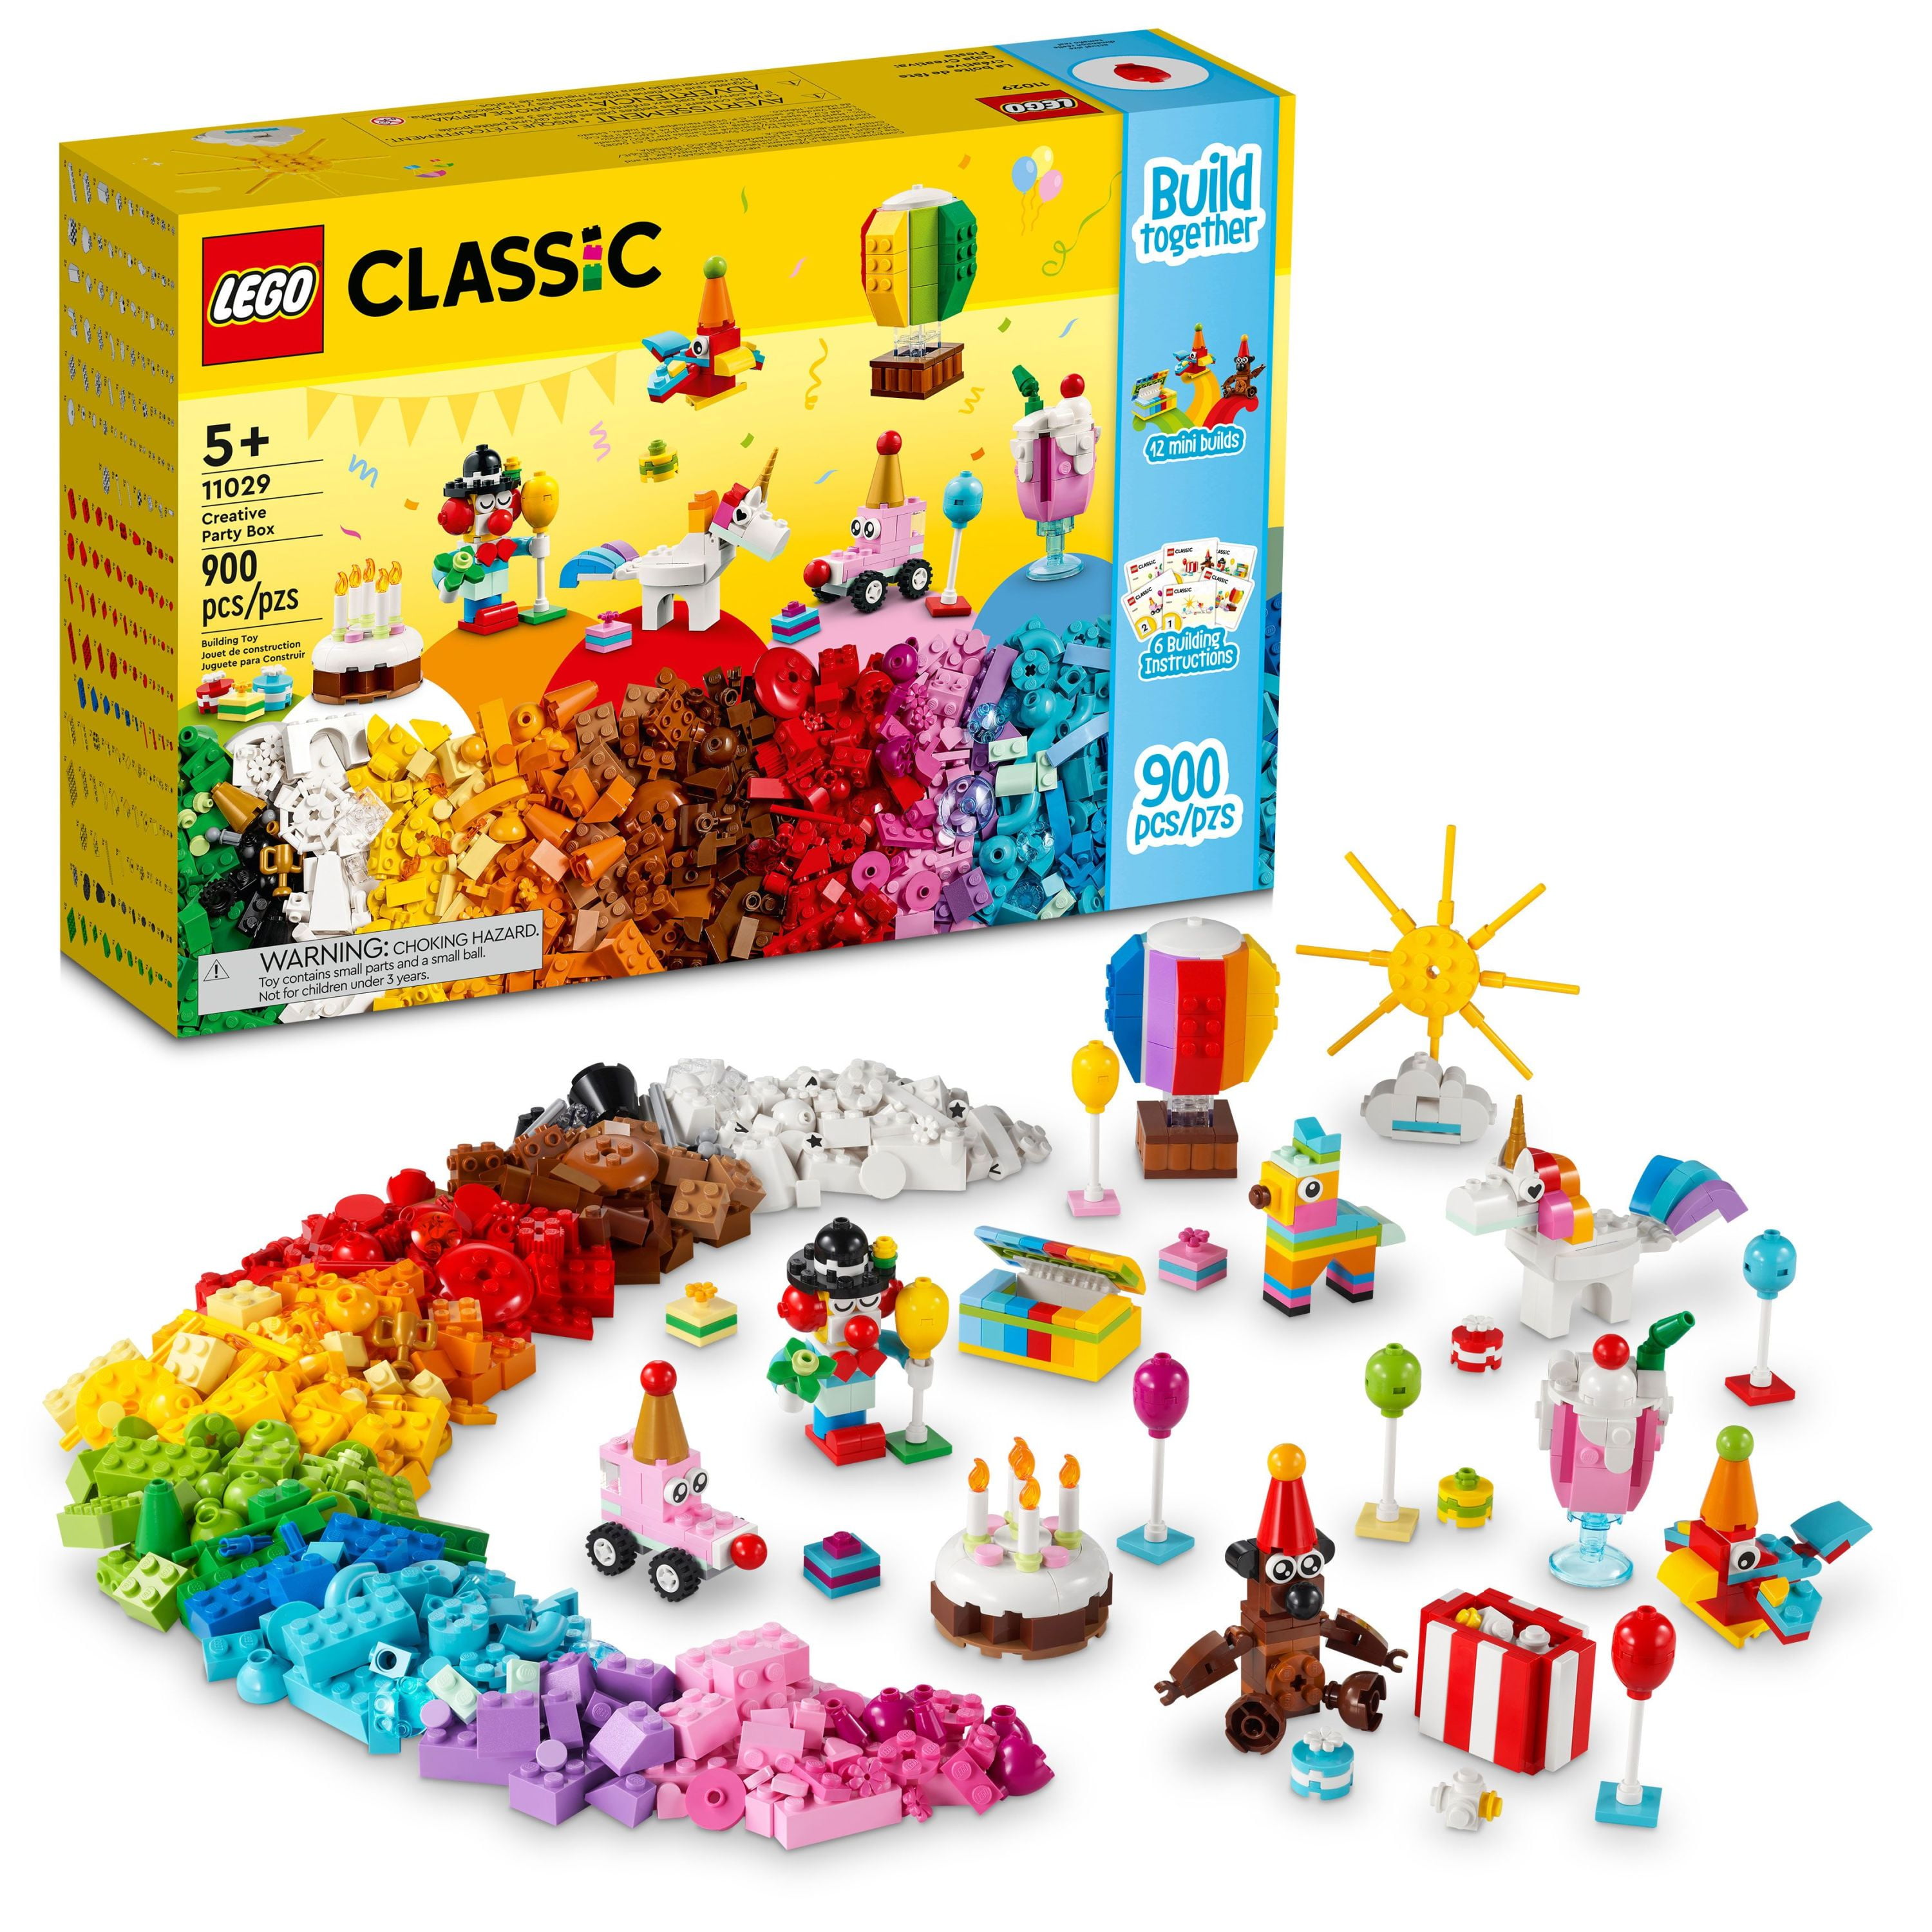 LEGO Unicorn Building Instructions 002 — LEGO Classic Creative DIY